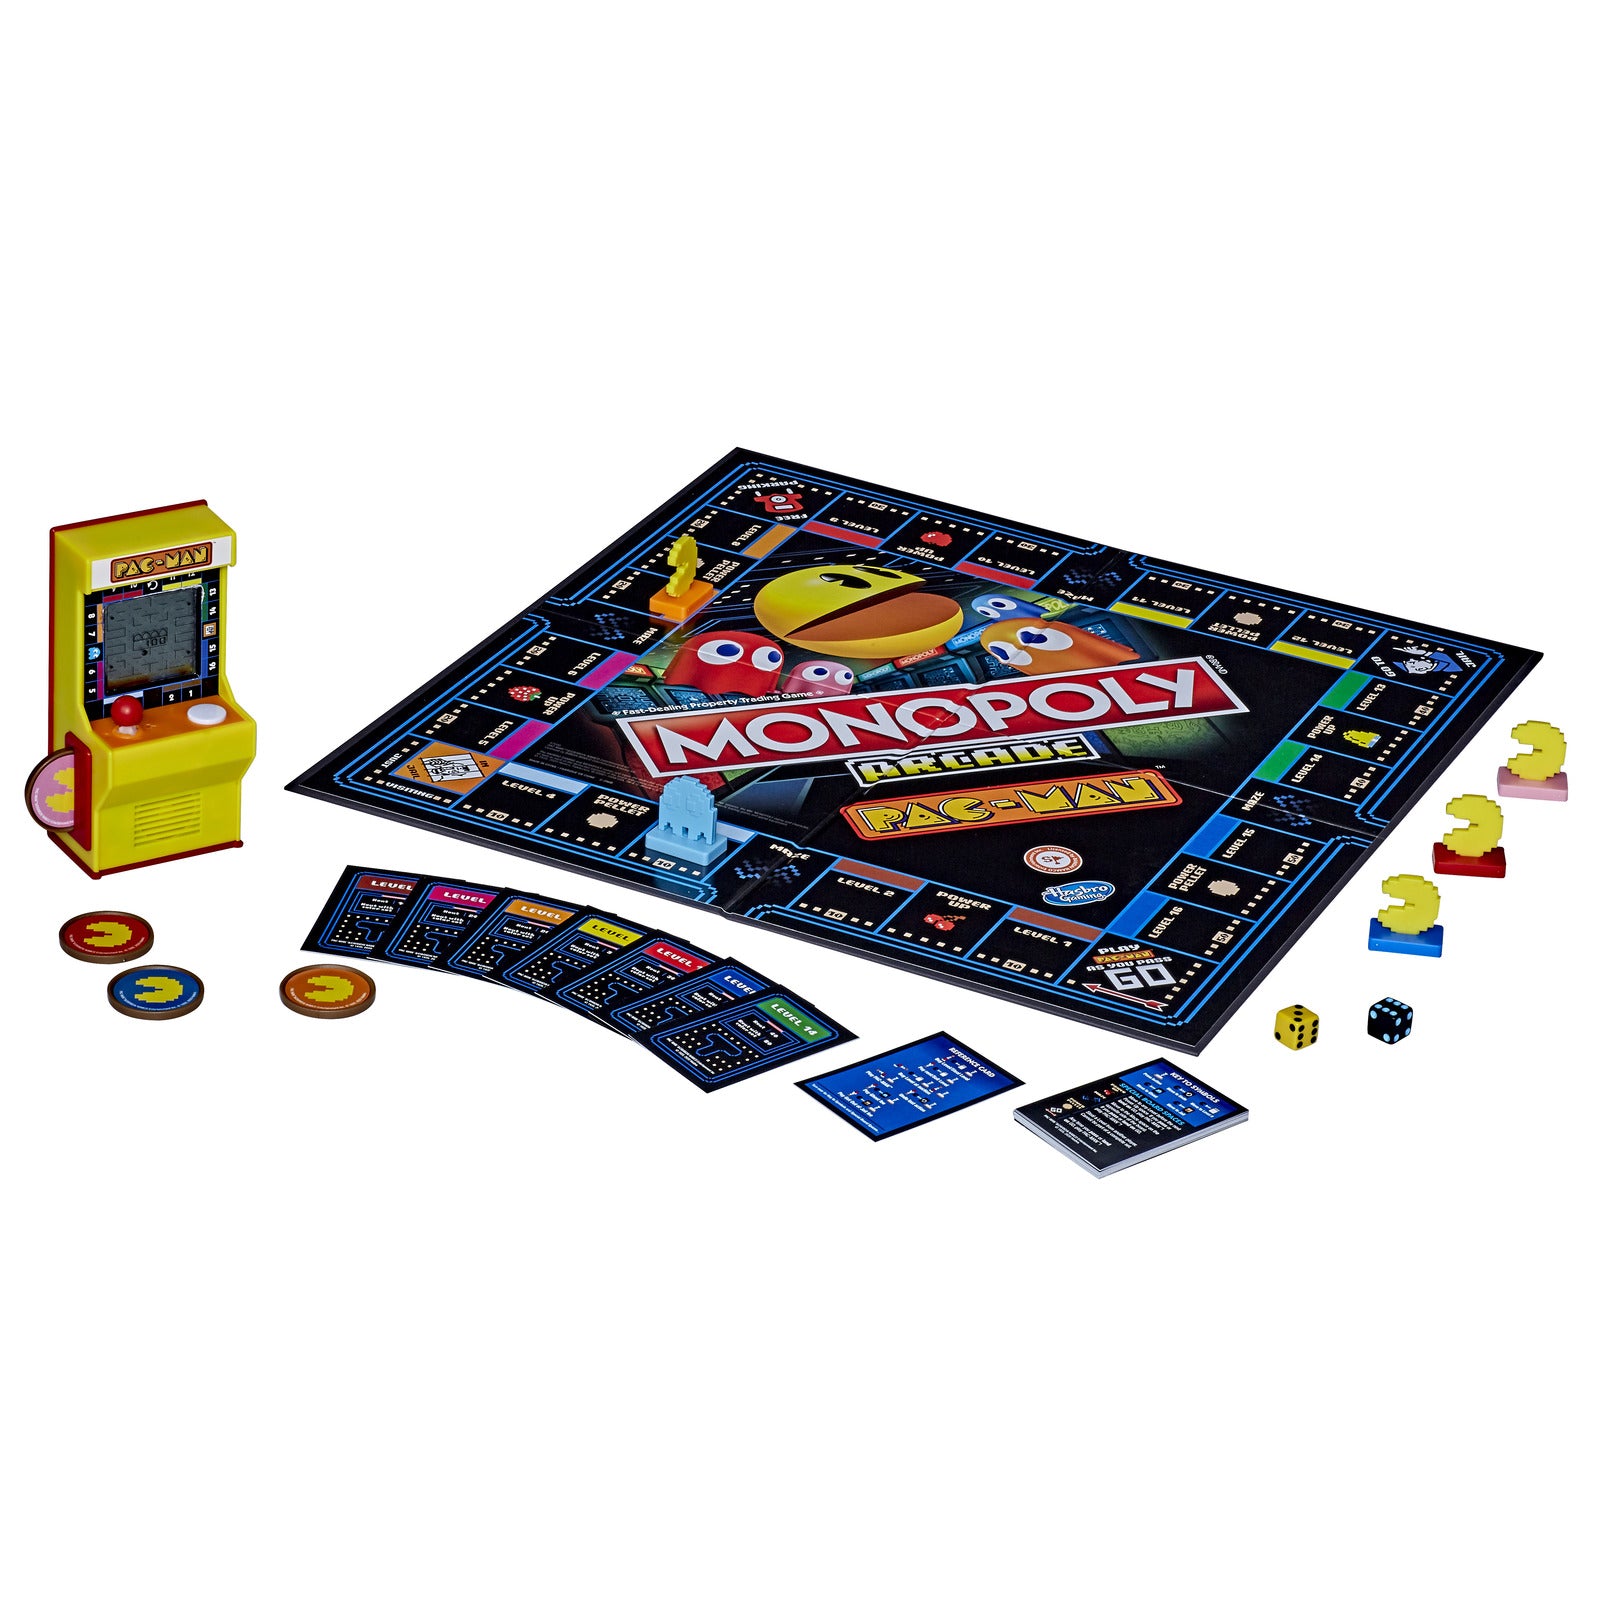 Monopoly: Arcade Pac-Man